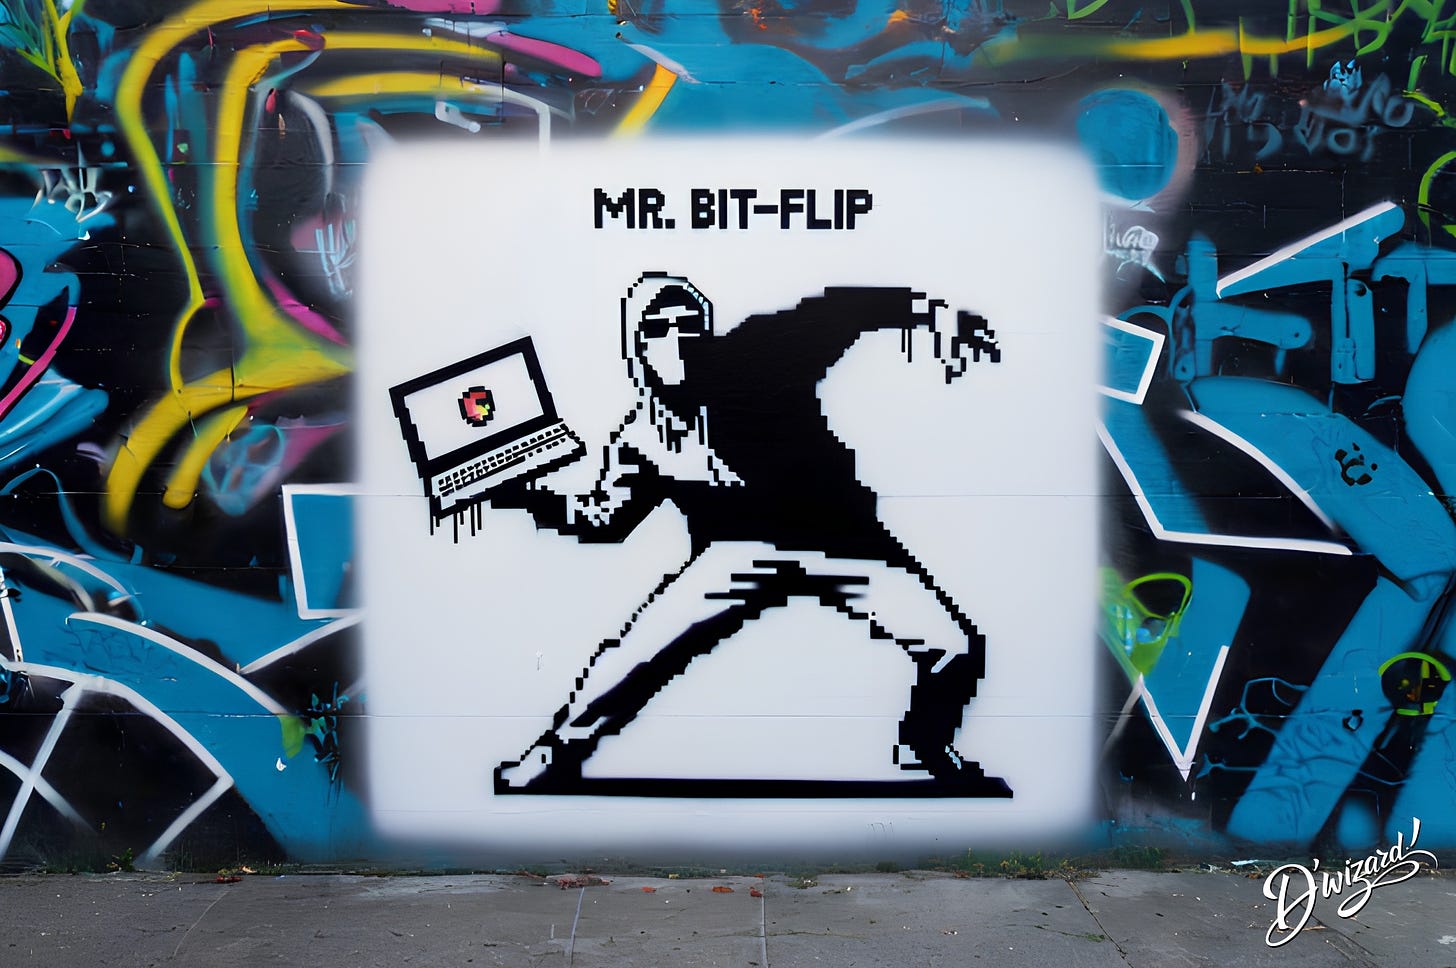 “MR. BIT-FLIP THE SYSTEM!”